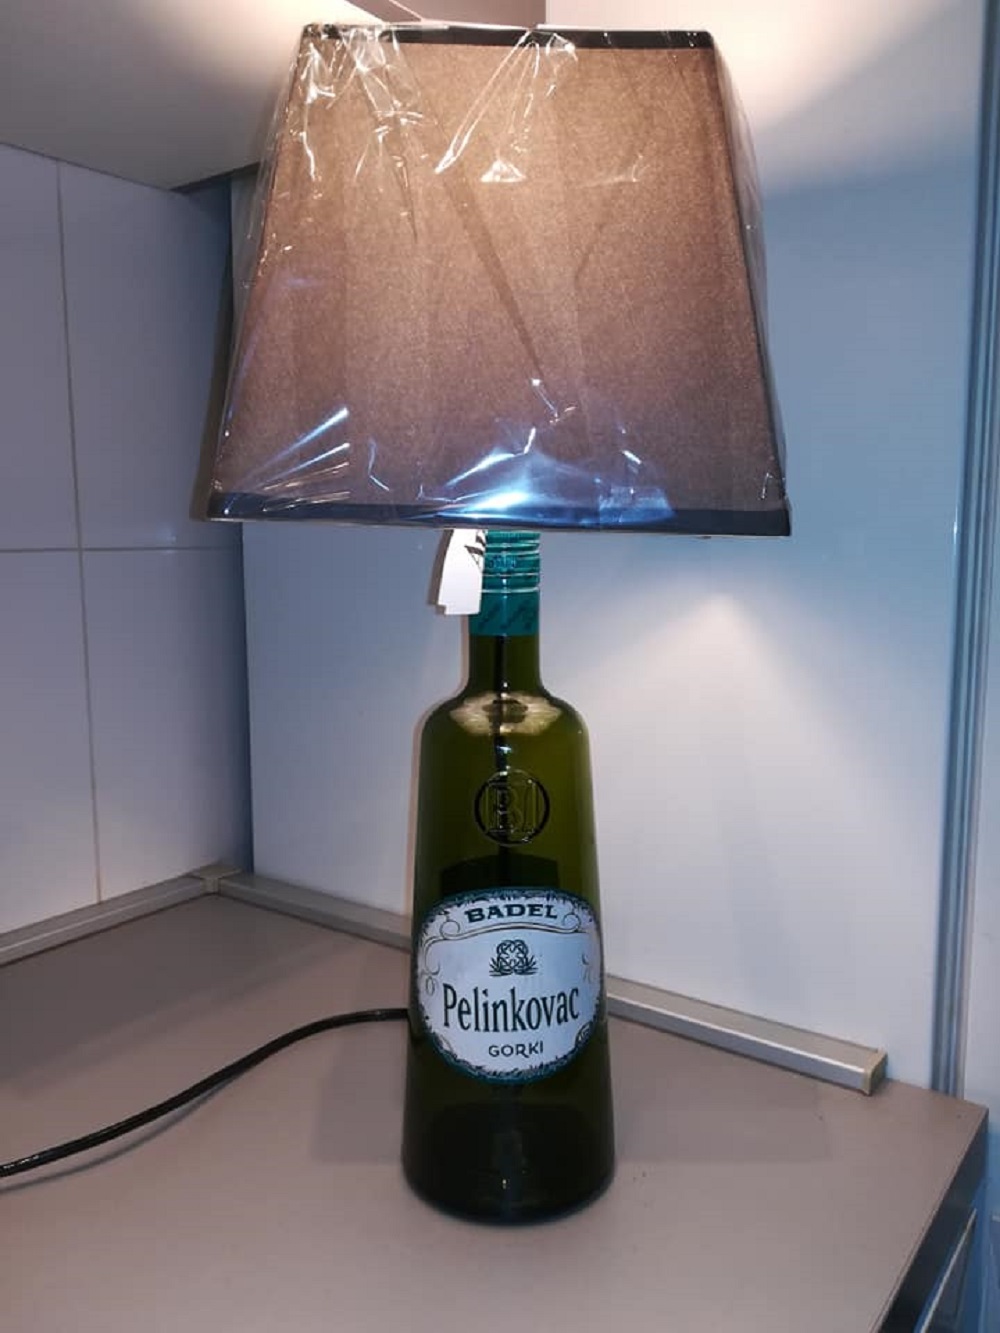 I ovo remek djelo: lampa od flaše Pelina; 150 kuna. 
<br>
<br>
Možete je pronaći na <a href="https://www.facebook.com/marketplace/item/200365274251088"><b>Facebook Marketplaceu</b></a>